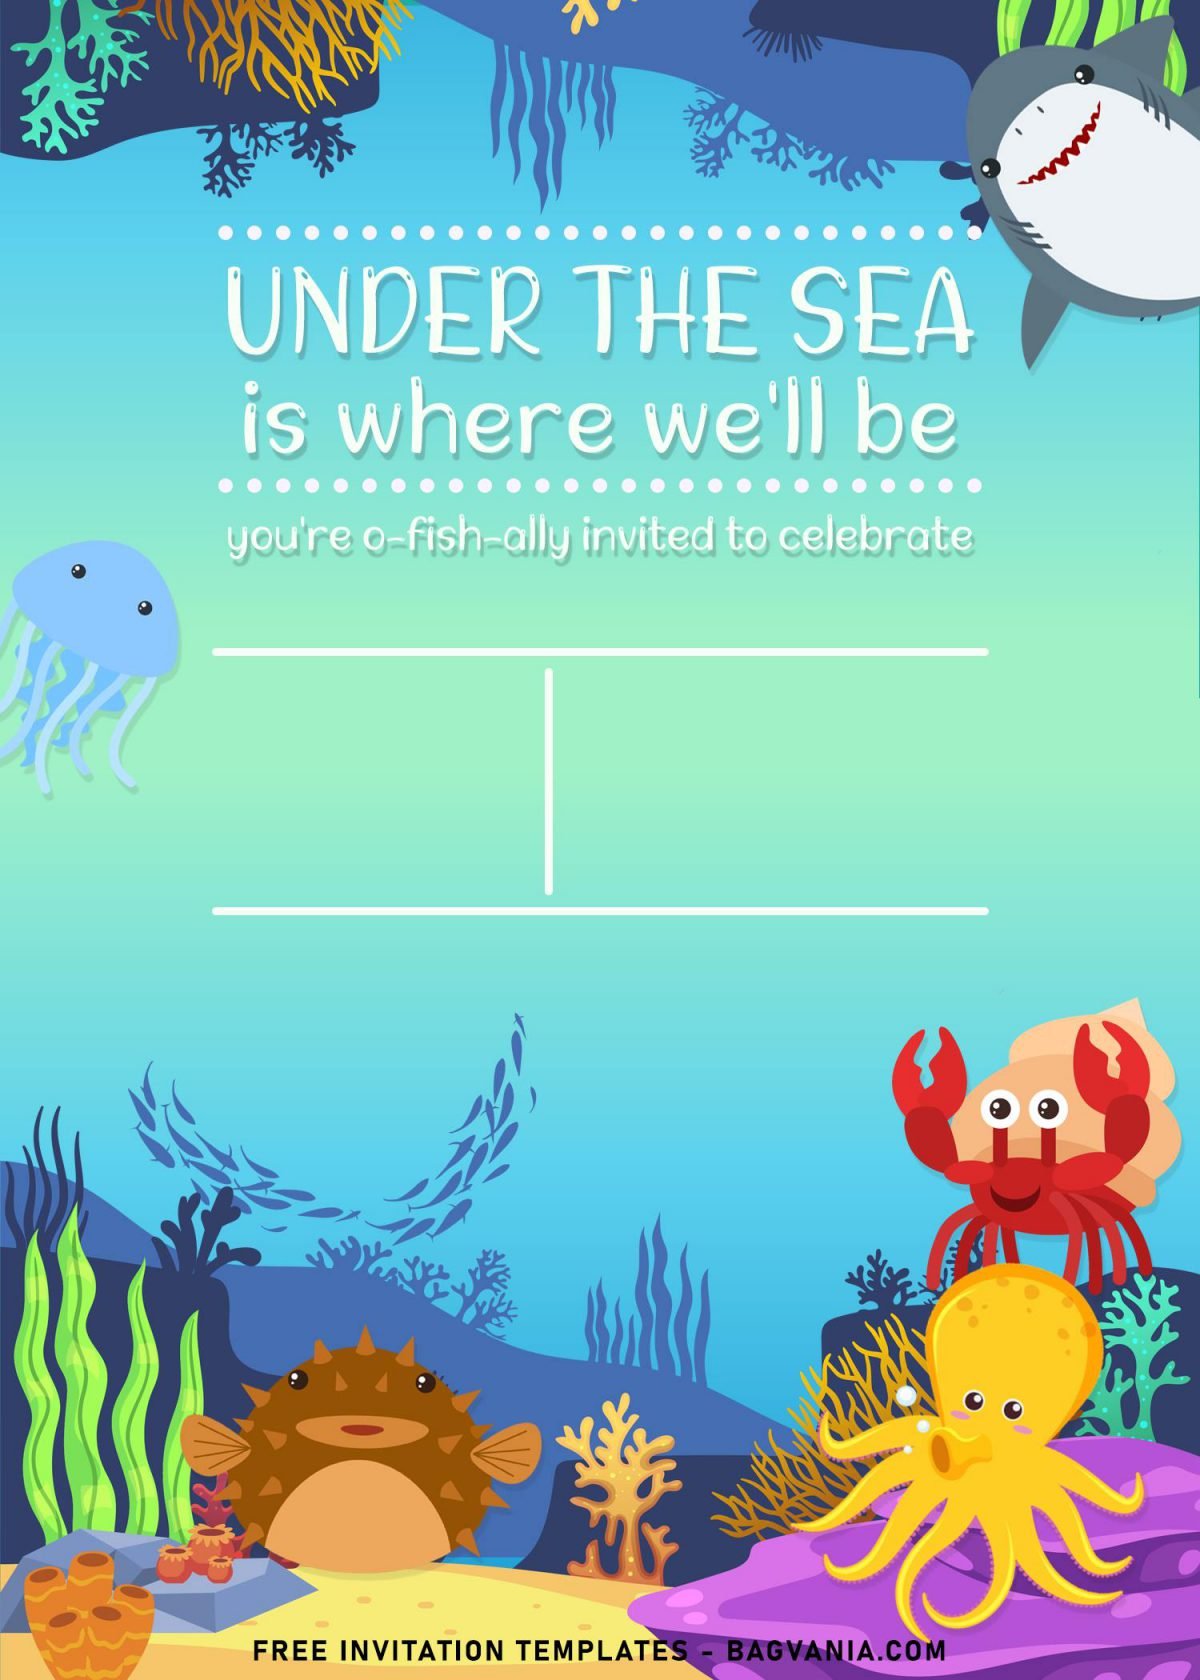 9+ Under The Sea Themed Birthday Invitation Templates and has sea animals